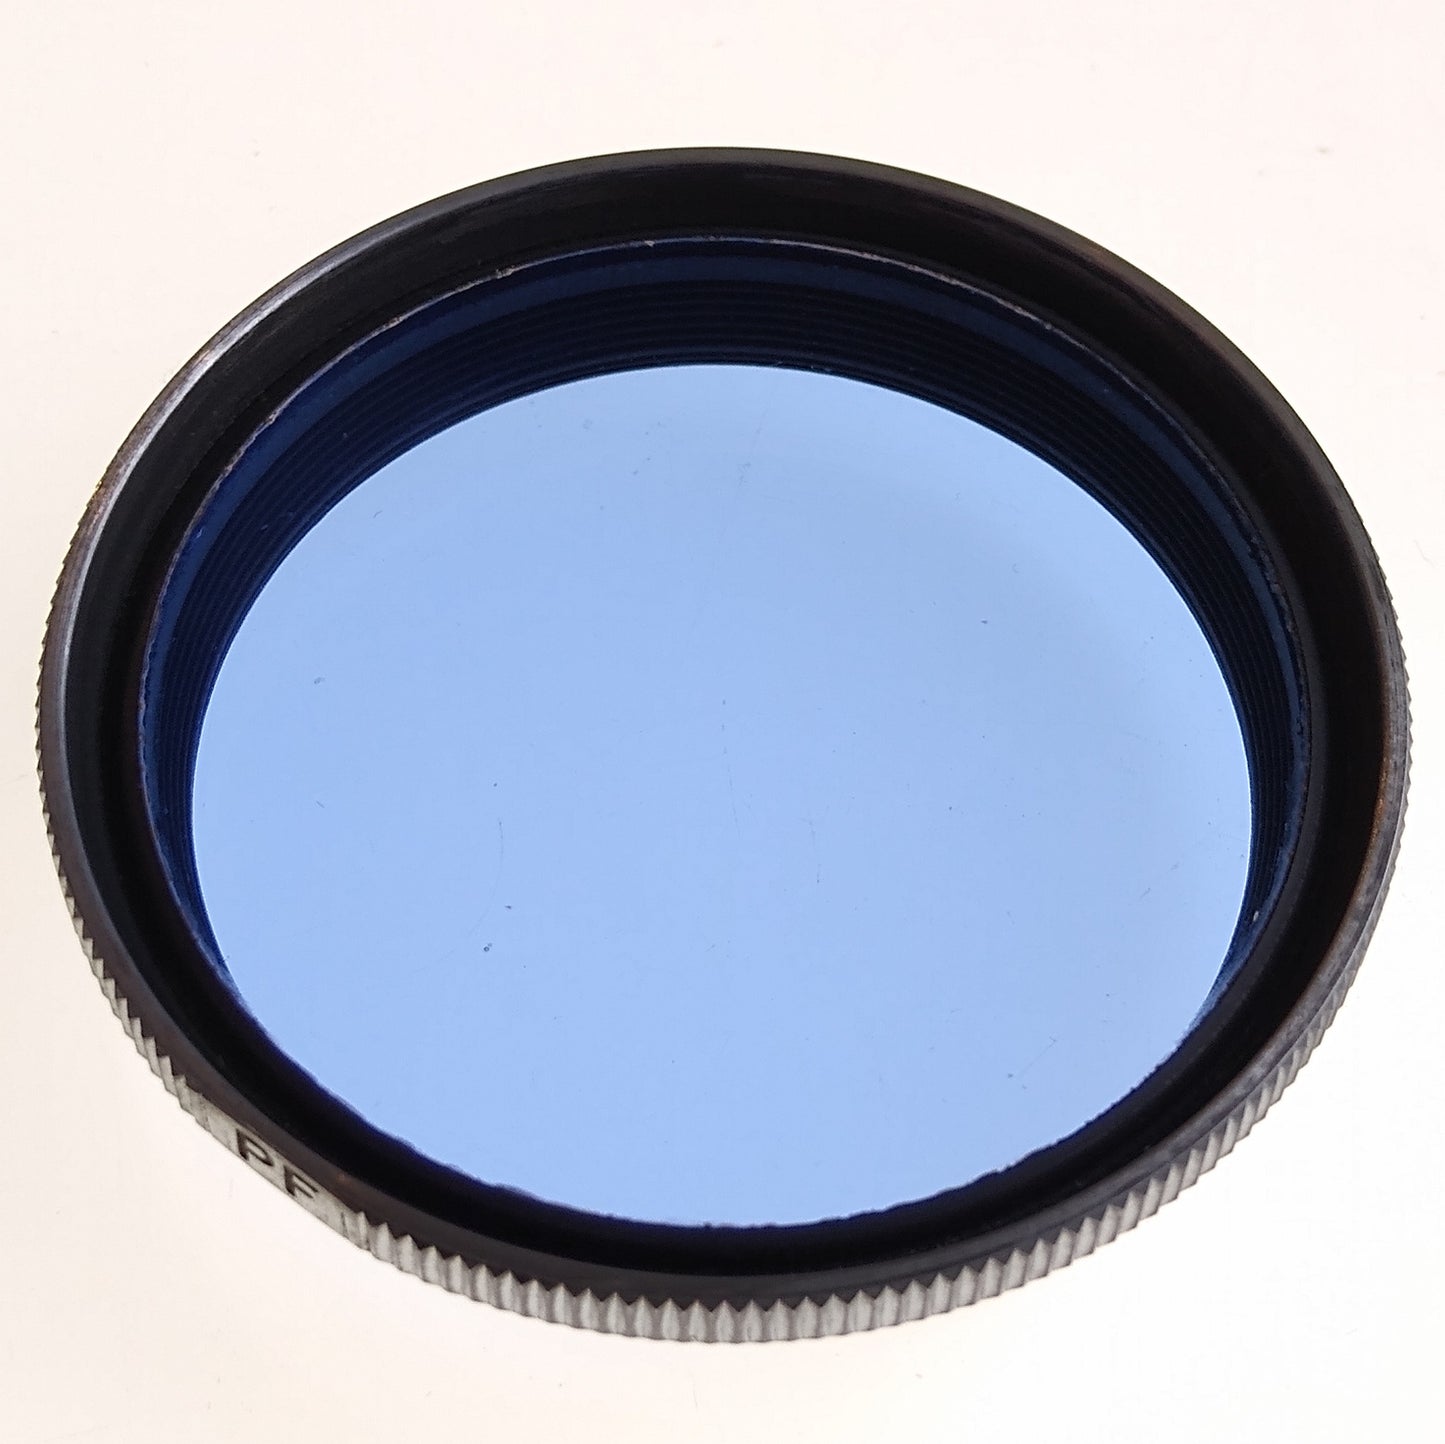 E. Leitz NY FIFLO Photoflood (Blue) filter.